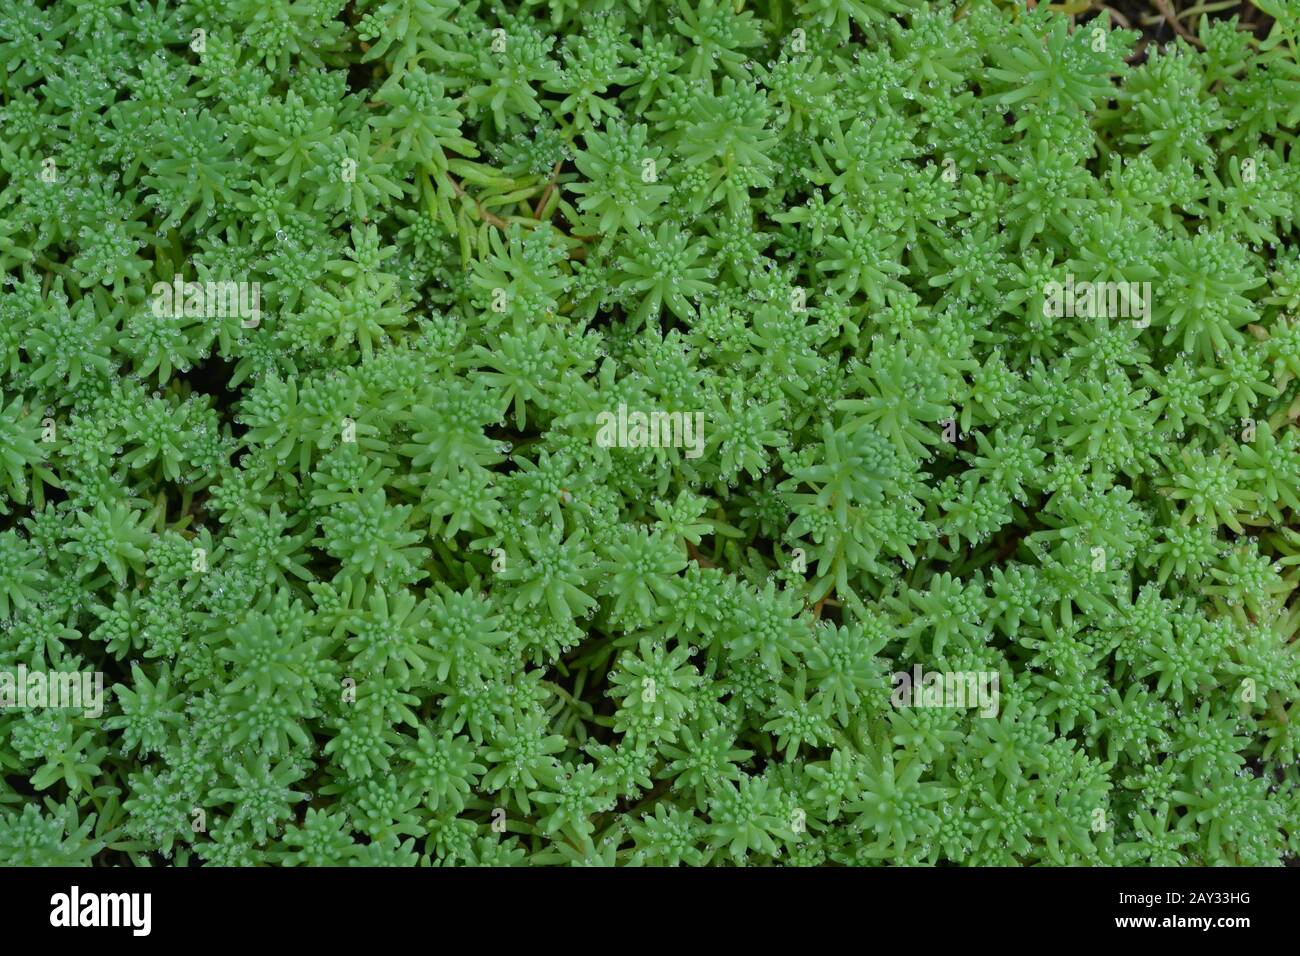 Stonecrop. Hare cabbage. Sedum. Green moss. Decorative grassy carpet. Flowerbed, garden. Close-up. Horizontal photo Stock Photo